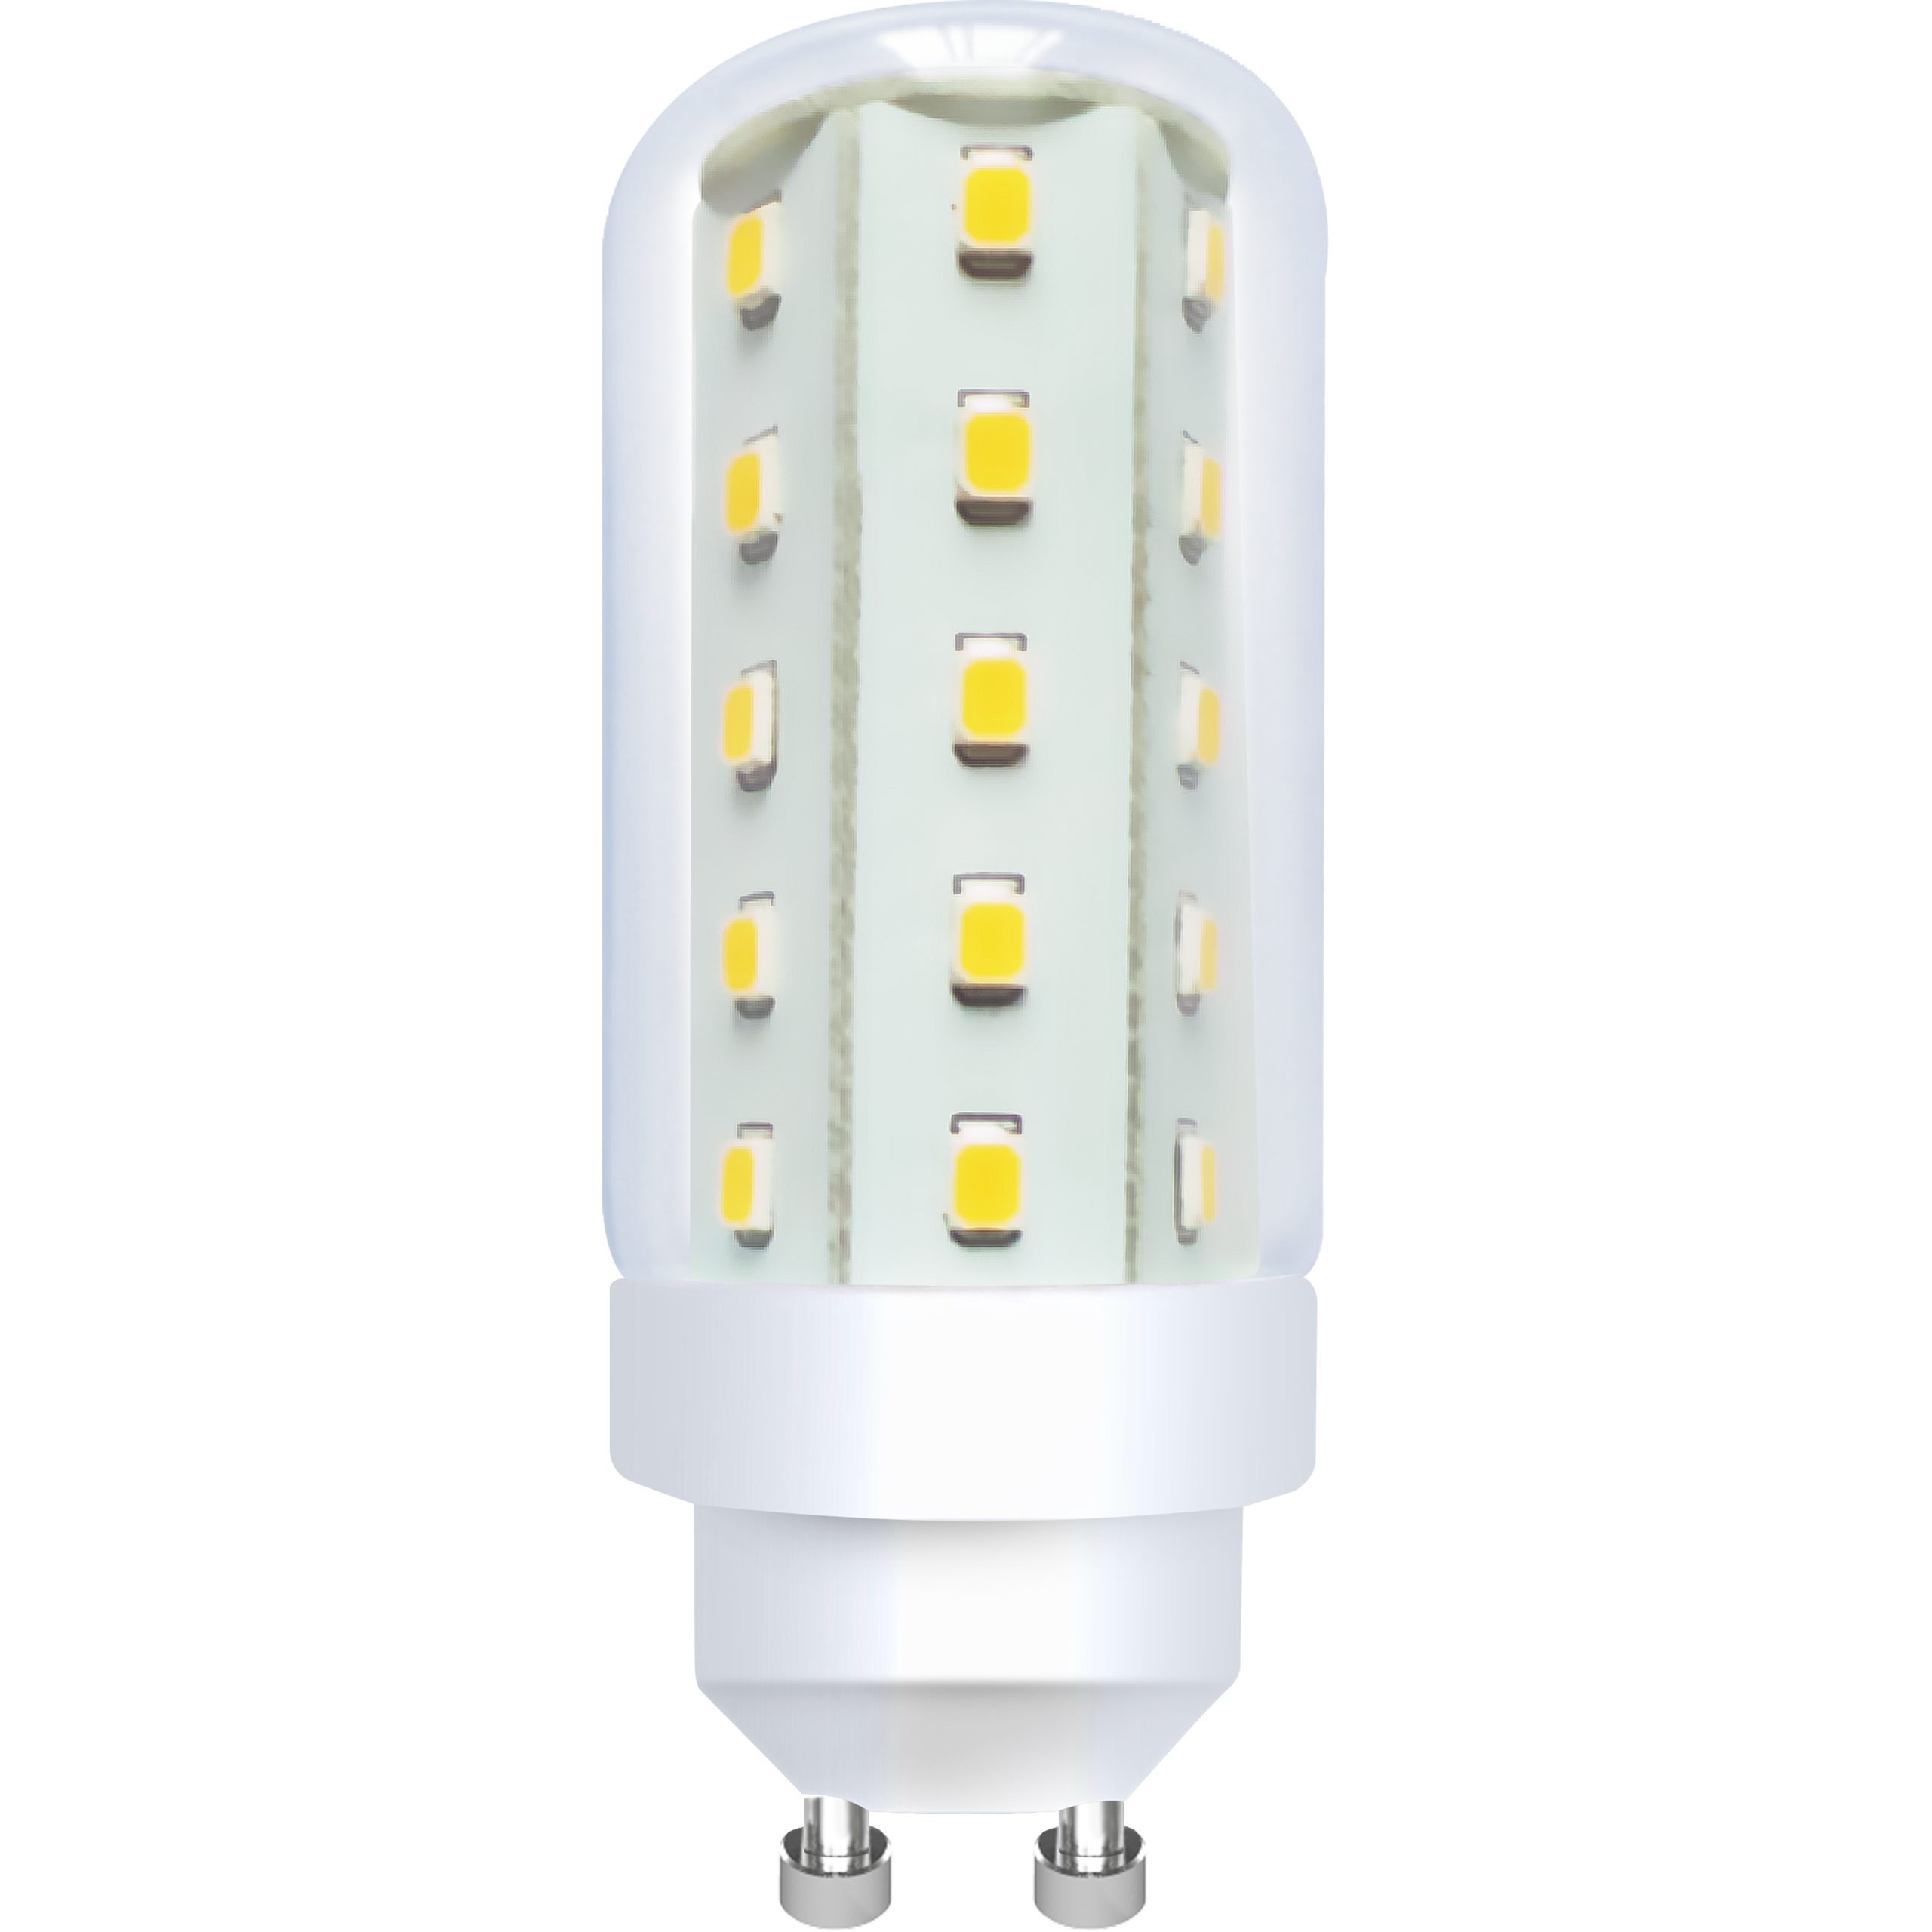 LED's light LED-Leuchtmittel 0620202 LED T30 GU10, 4W beste Farbwiedergabe für CRI97 Kapsel, Klar warmweiß GU10